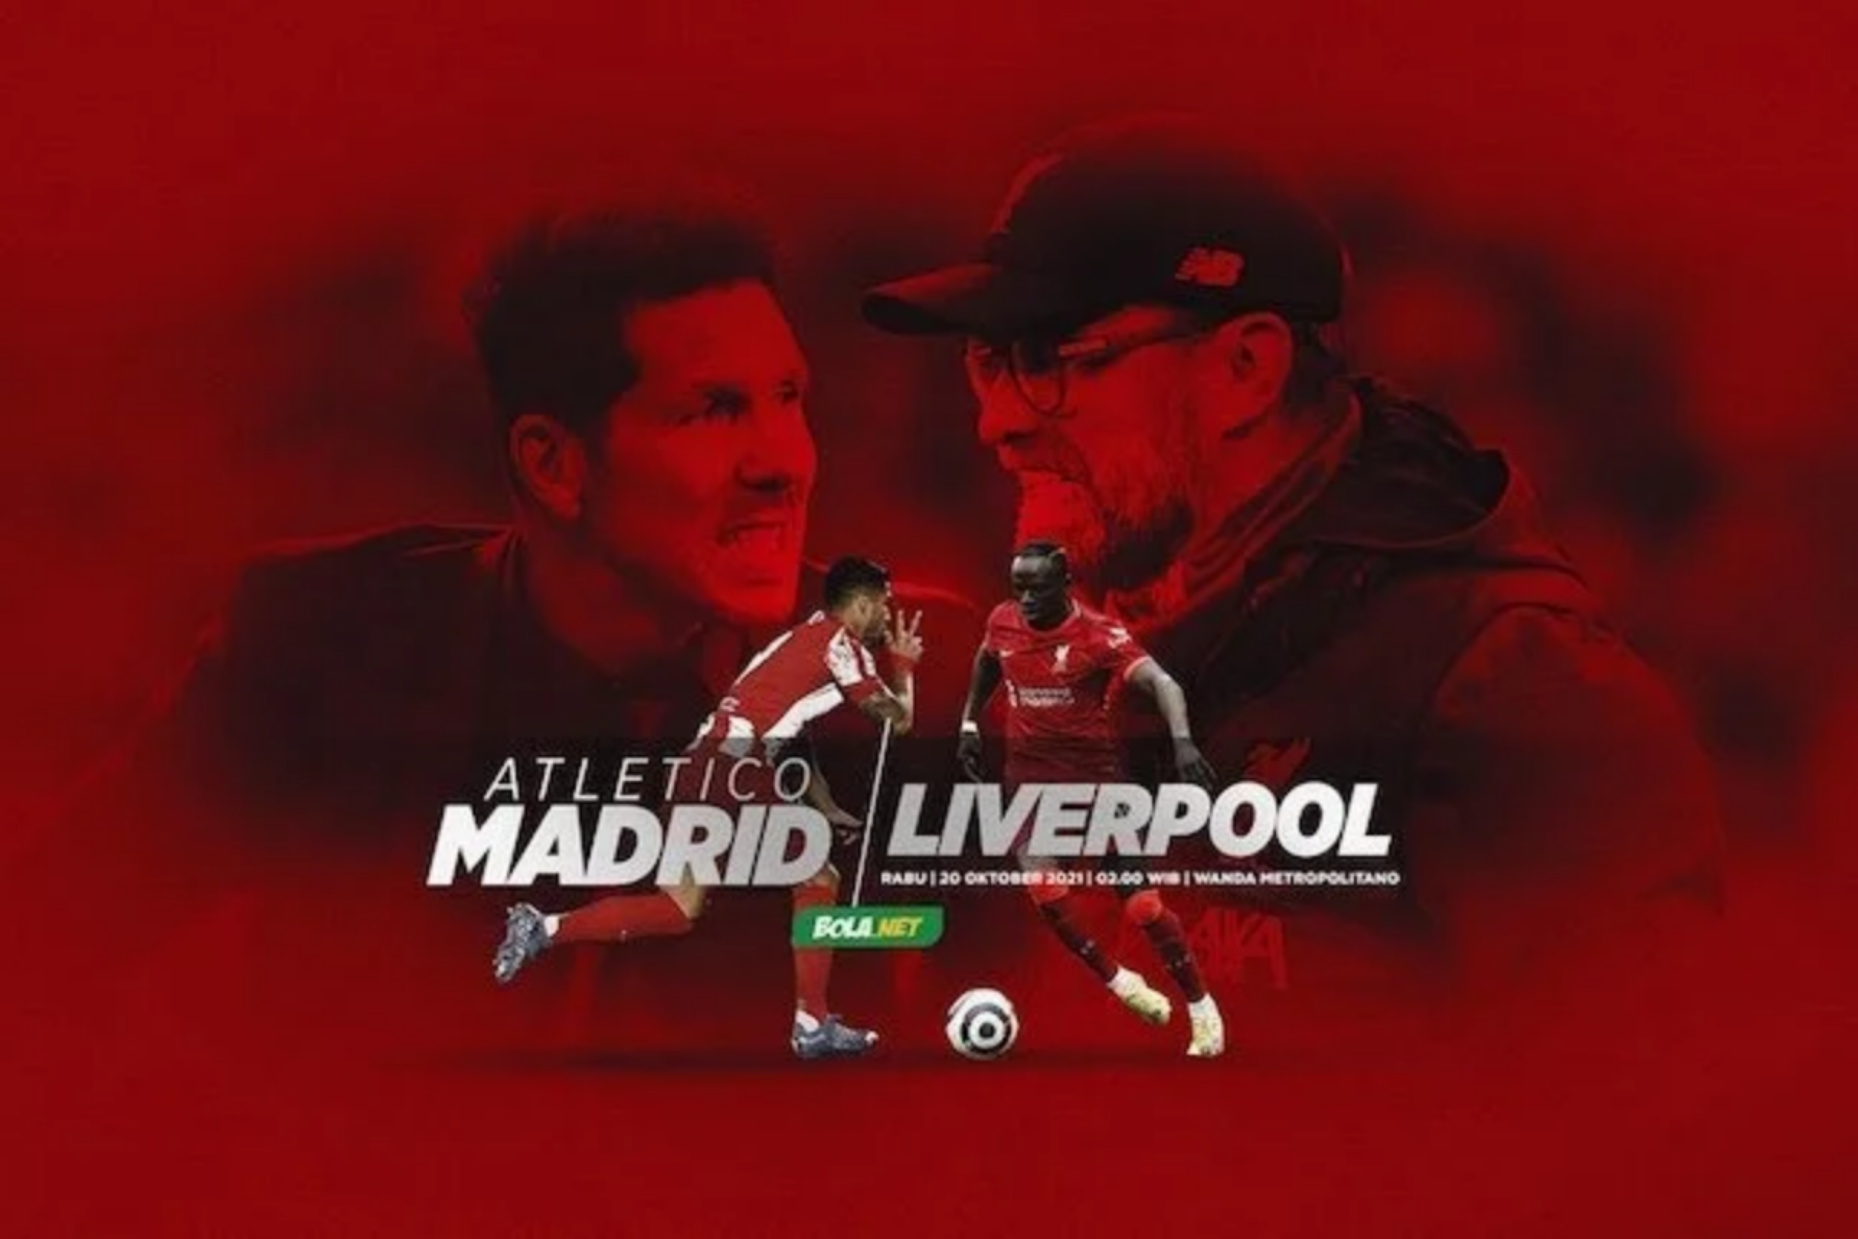 Live Streaming Atletico Madrid vs Liverpool, 20 Oktober 2021